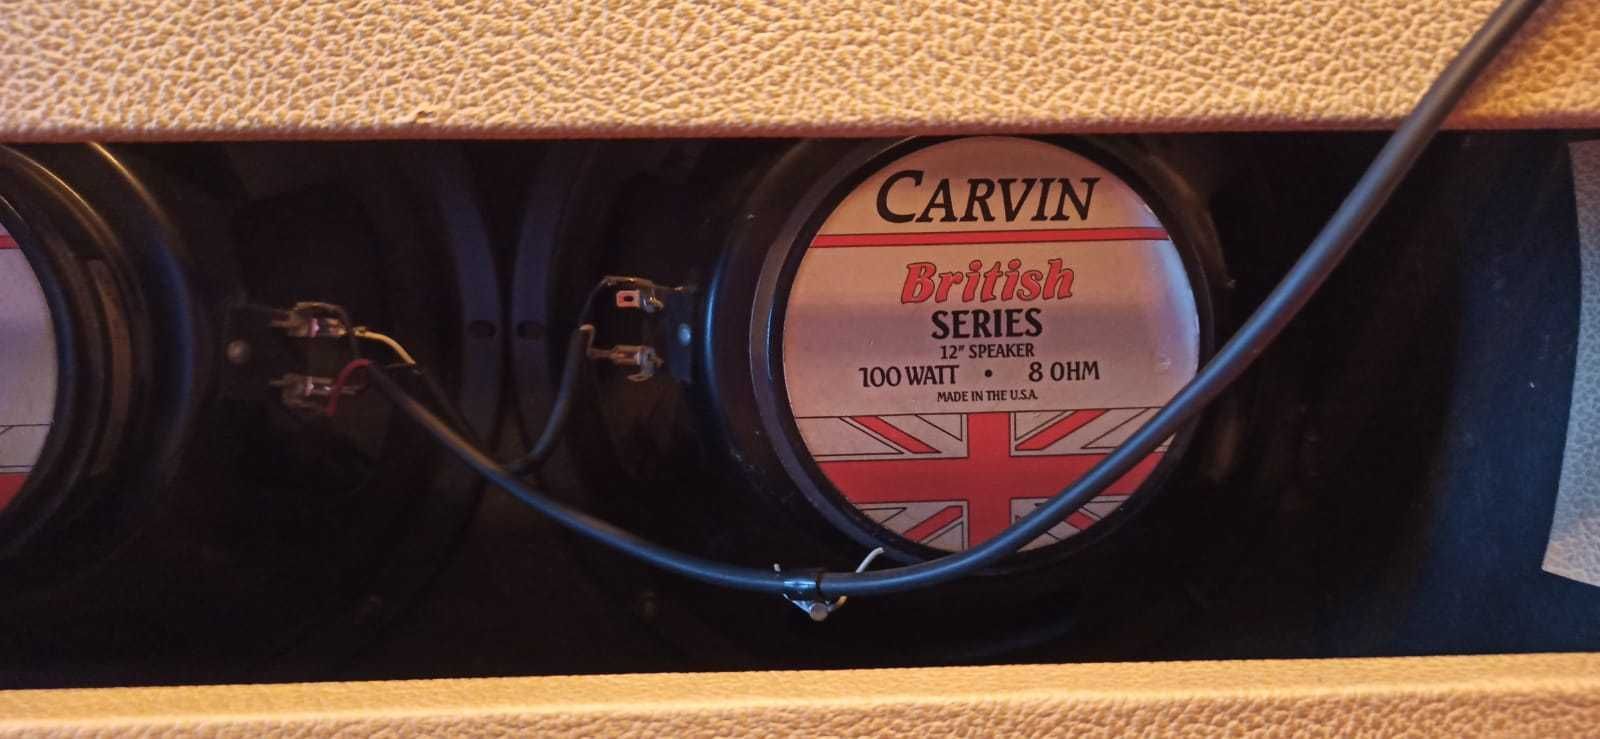 Amplificator chitara CARVIN Sx200 USA - 100w